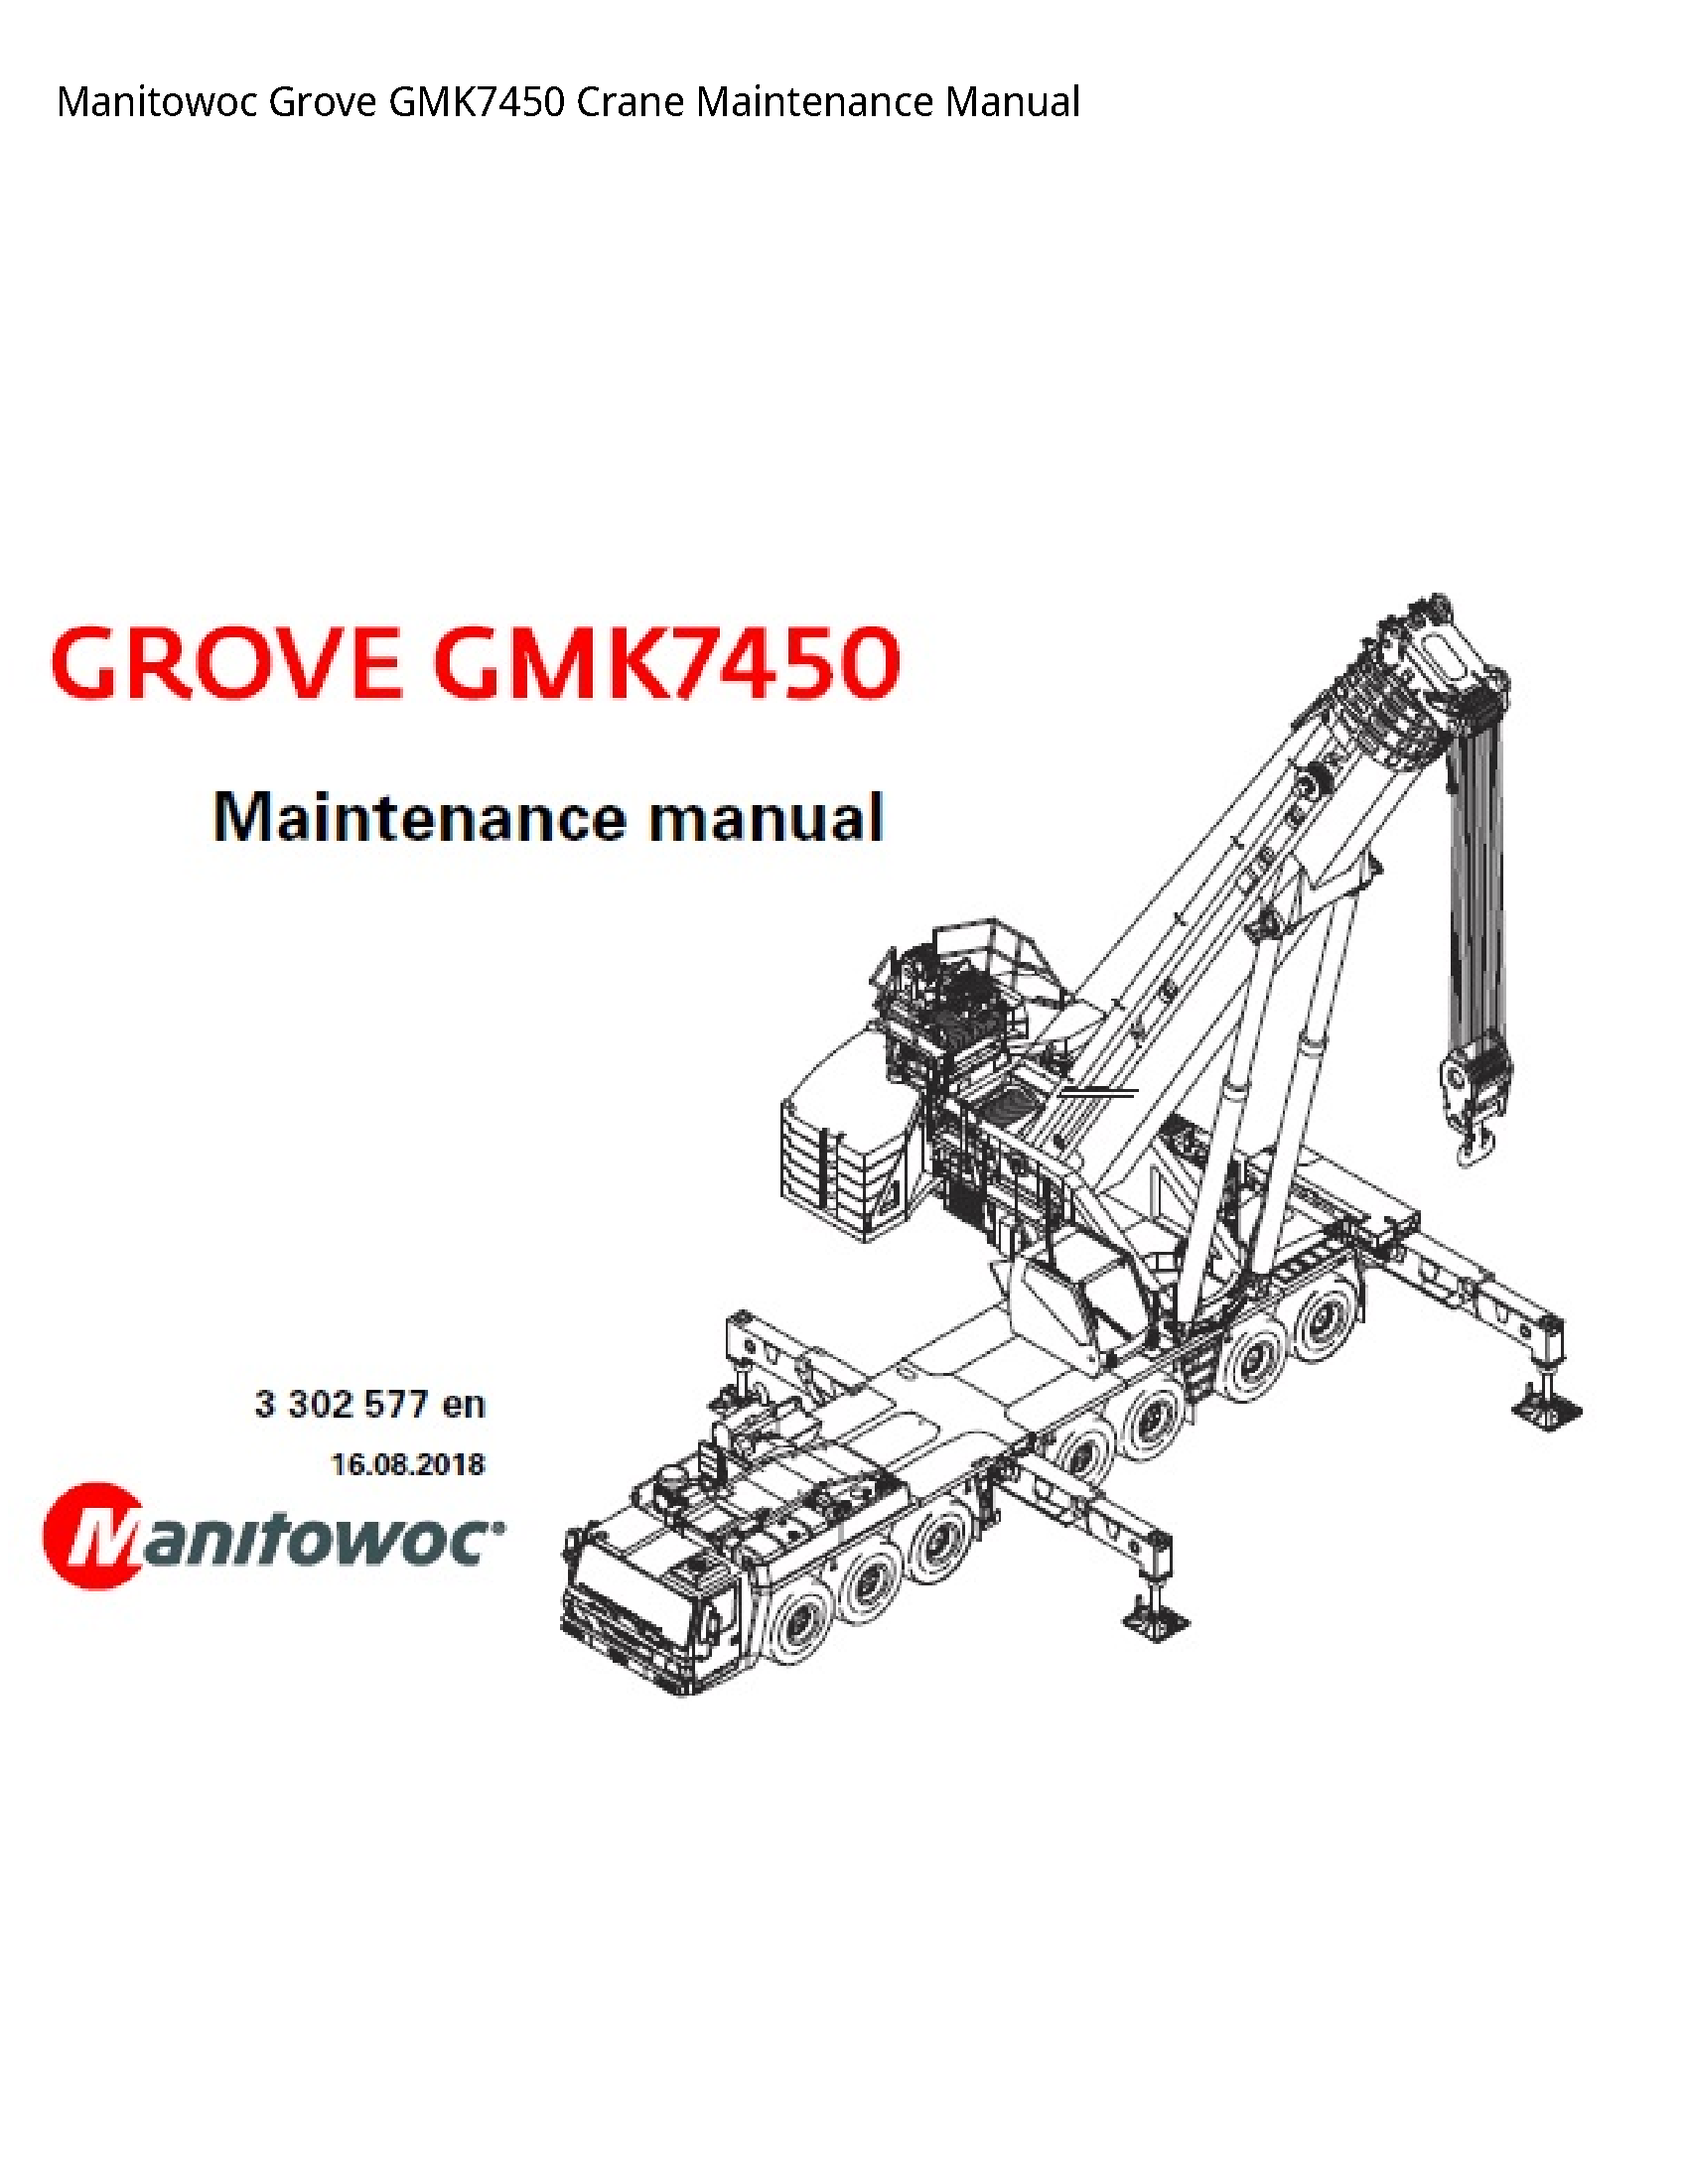 Manitowoc GMK7450 Grove Crane Maintenance manual